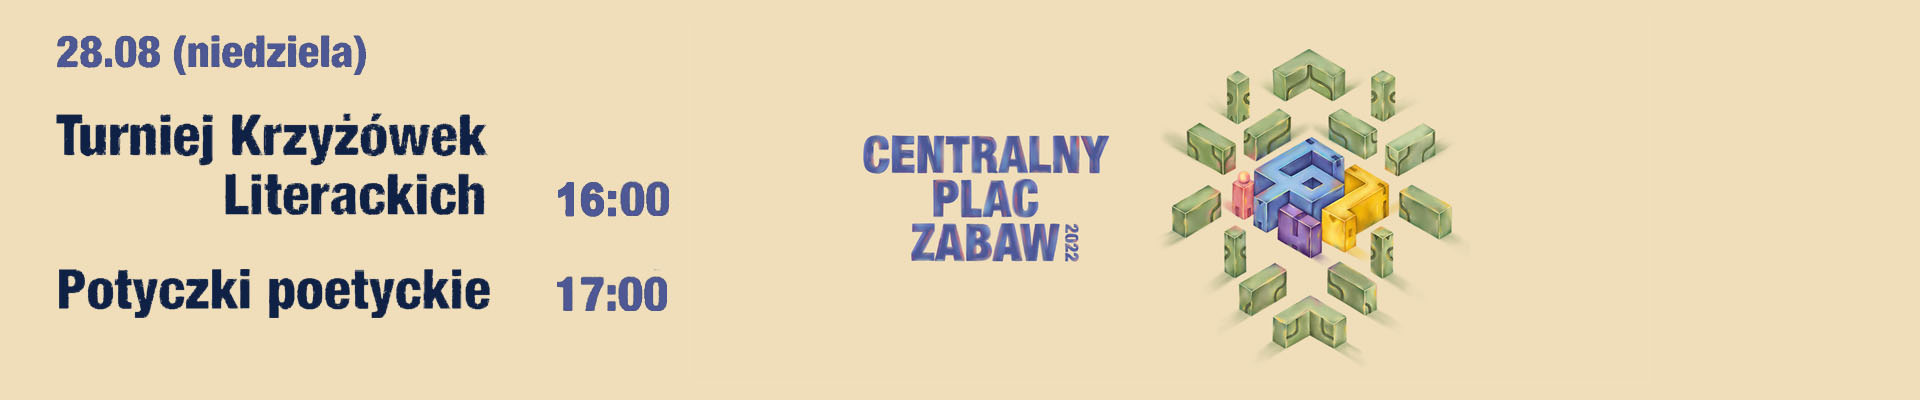 CENTRALNY PLAC ZABAW